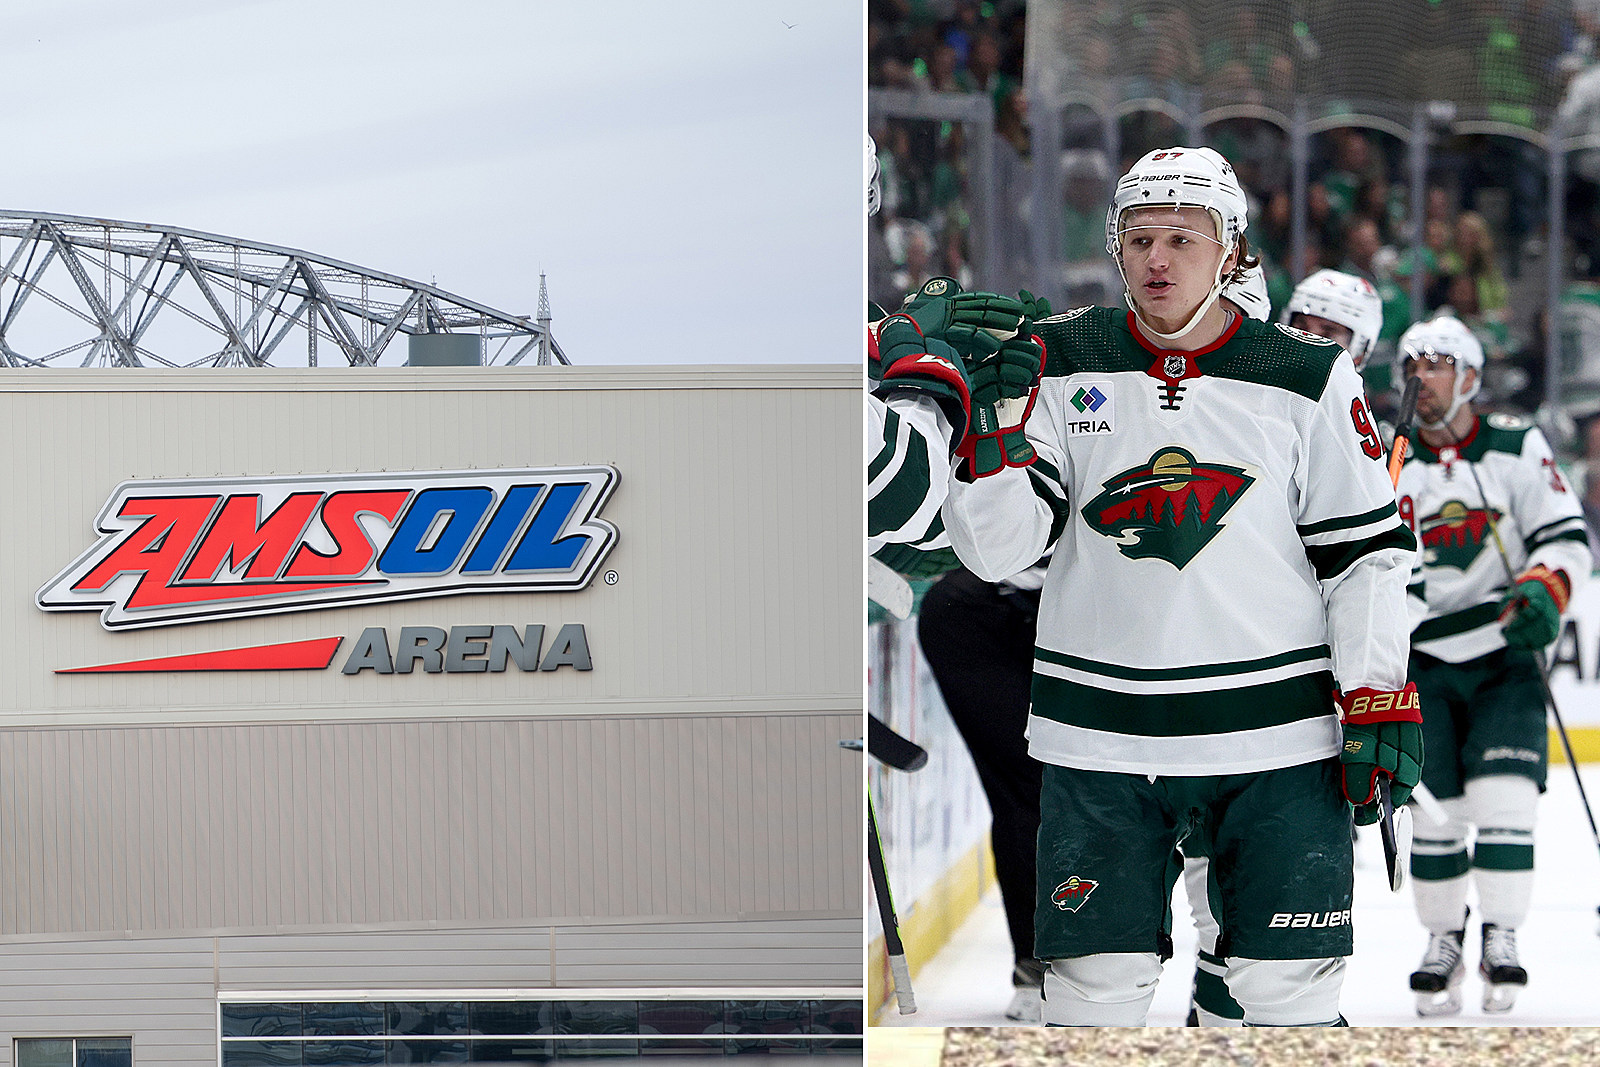 Minnesota Wild to host Crazy Game of Hockey - CBS Minnesota